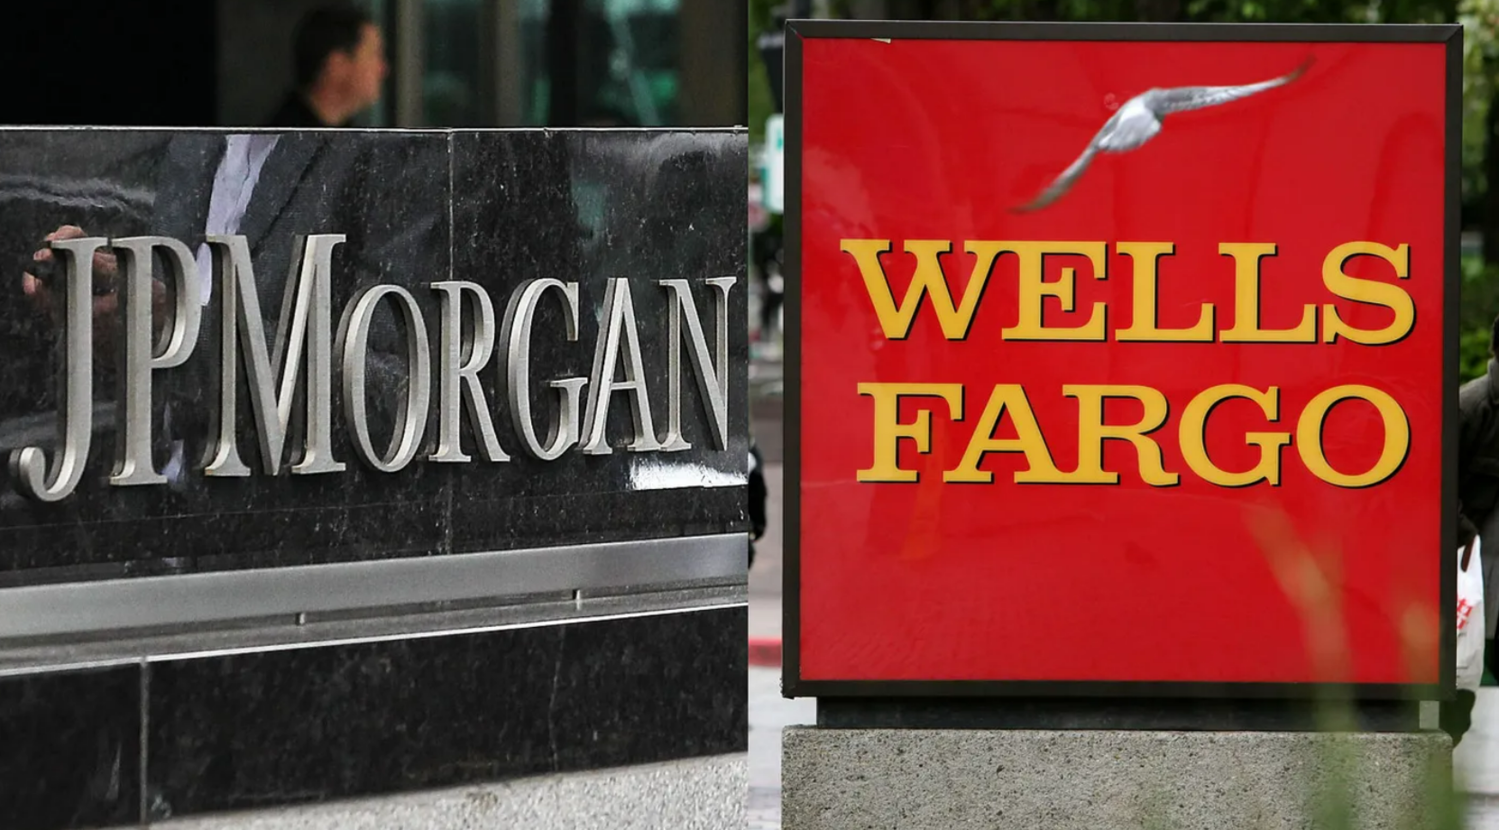 JPMorgans and wells Fargo